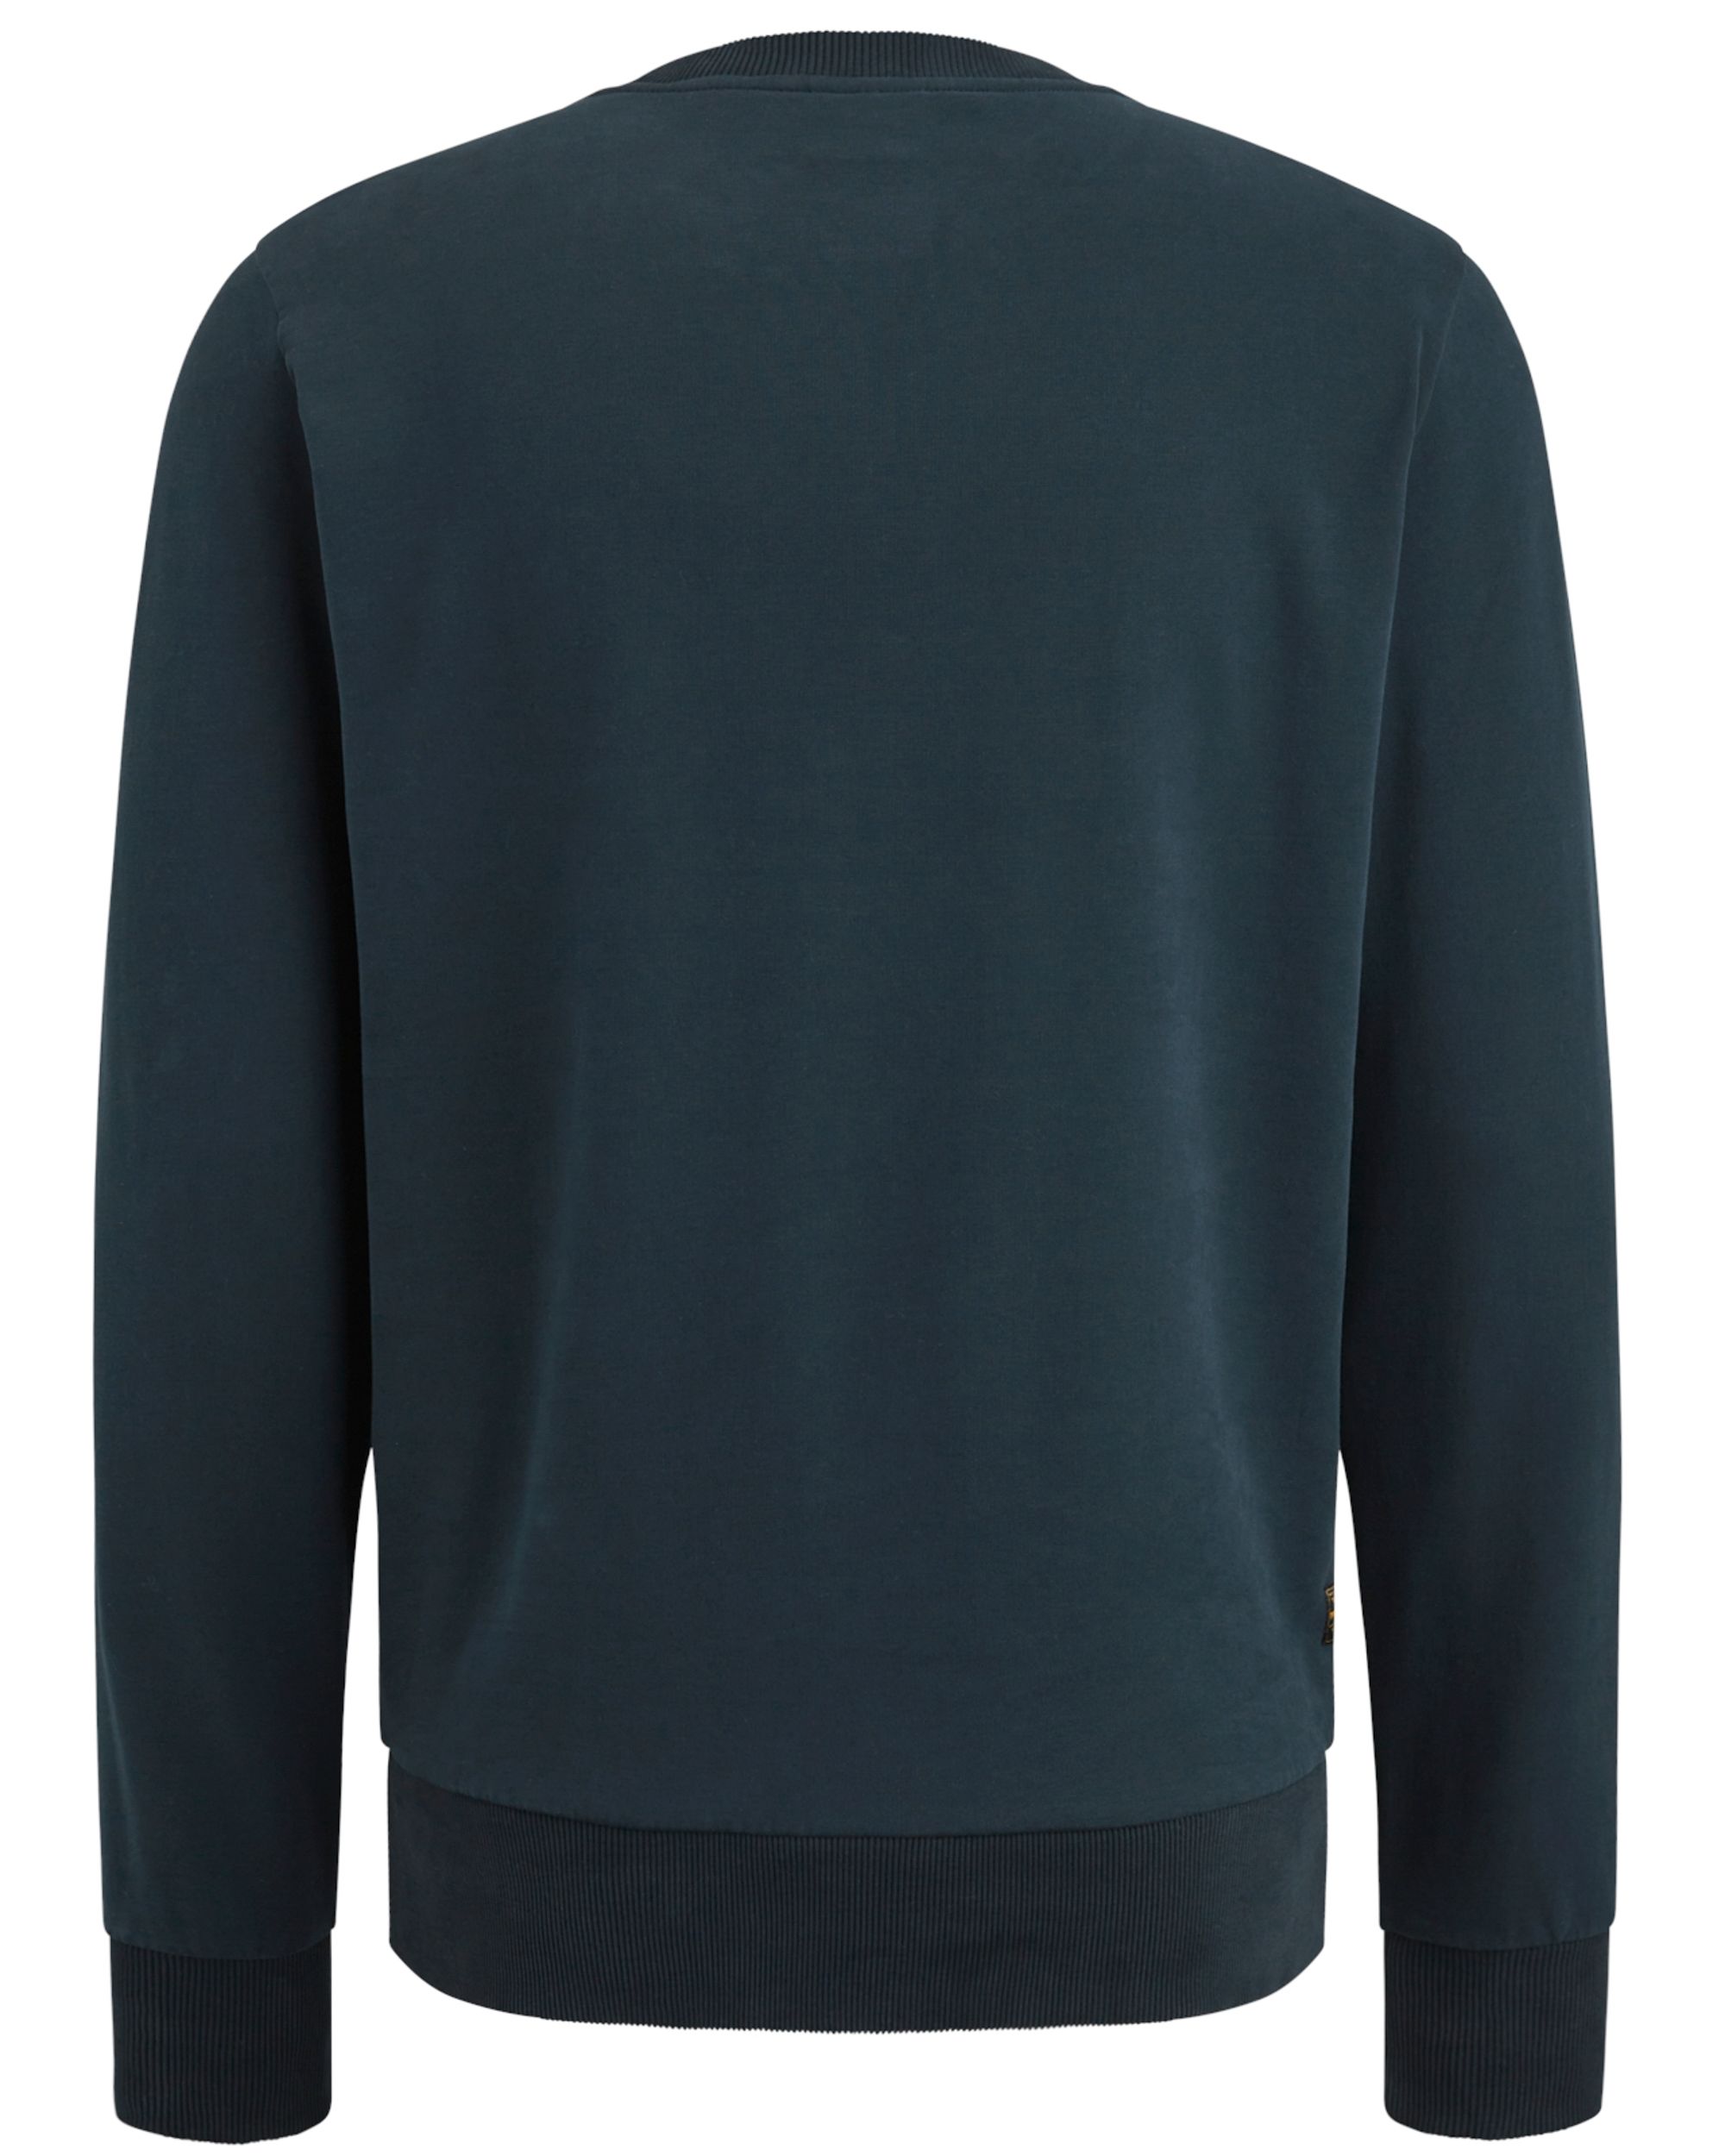 PME Legend Sweater Blauw 094893-001-L